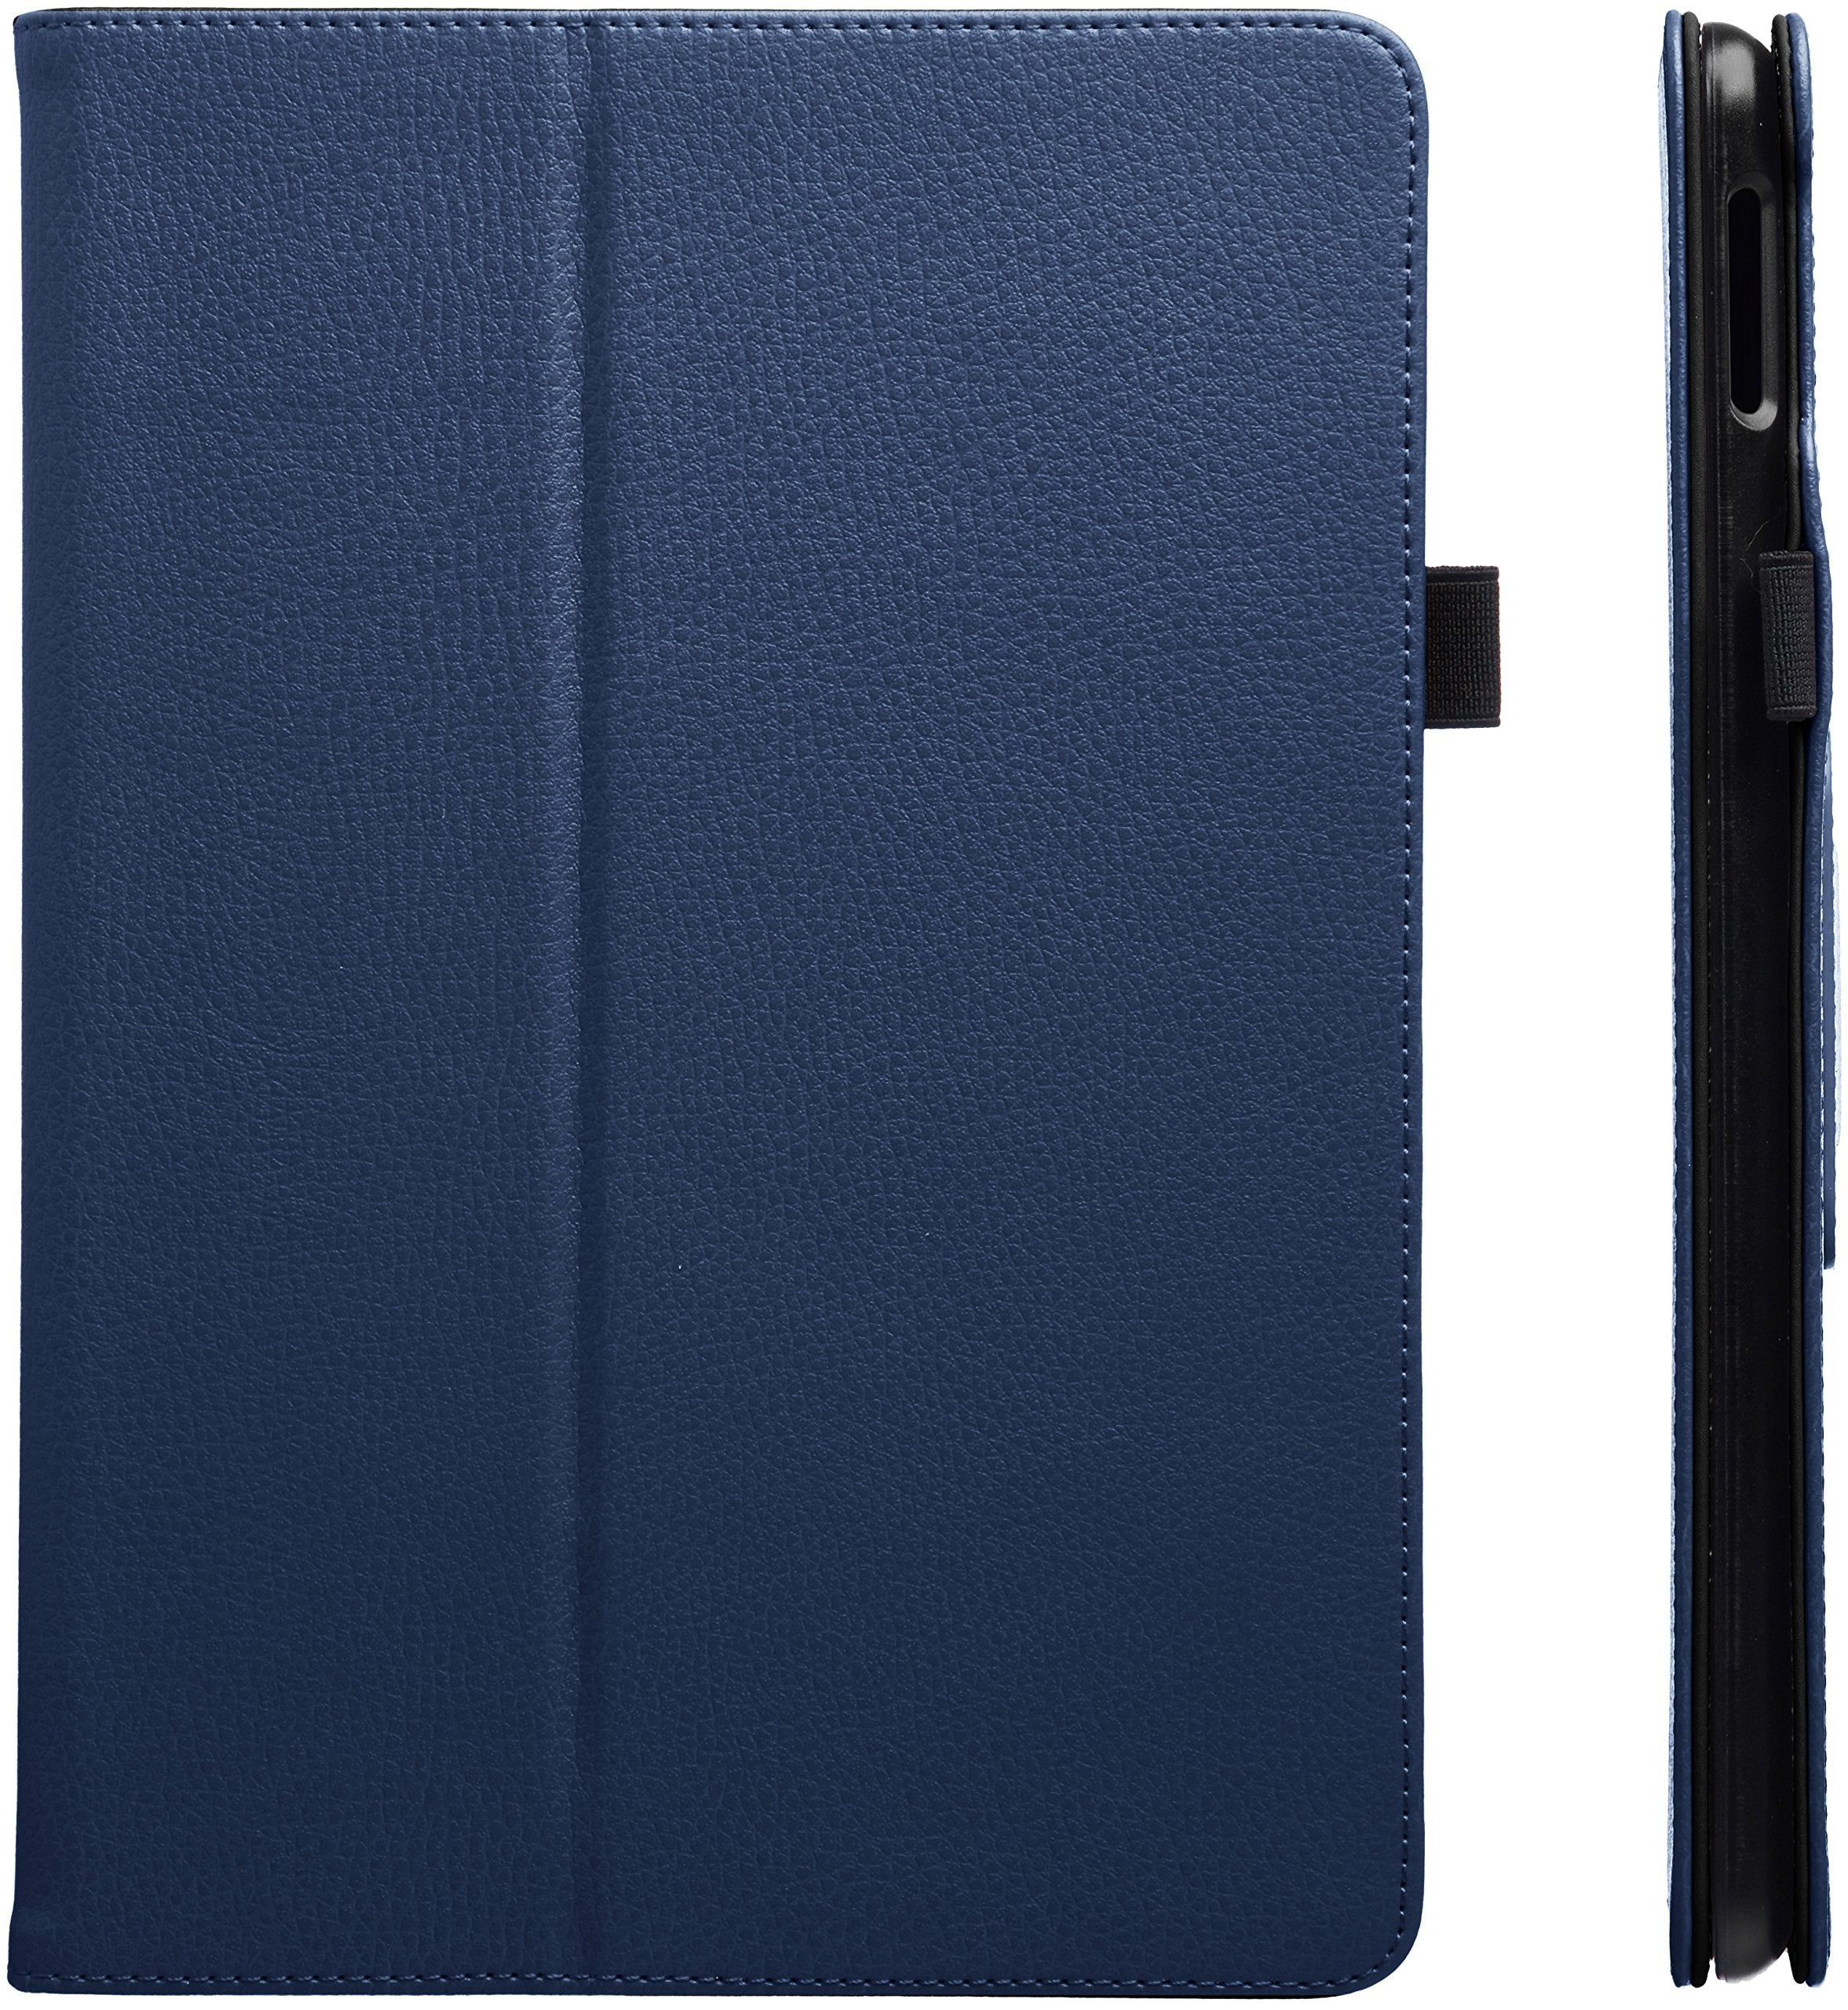 FREE - Amazon Basics iPad PU Leather Case Auto Wake/Sleep Cover, Navy, 9.7" - e4cents